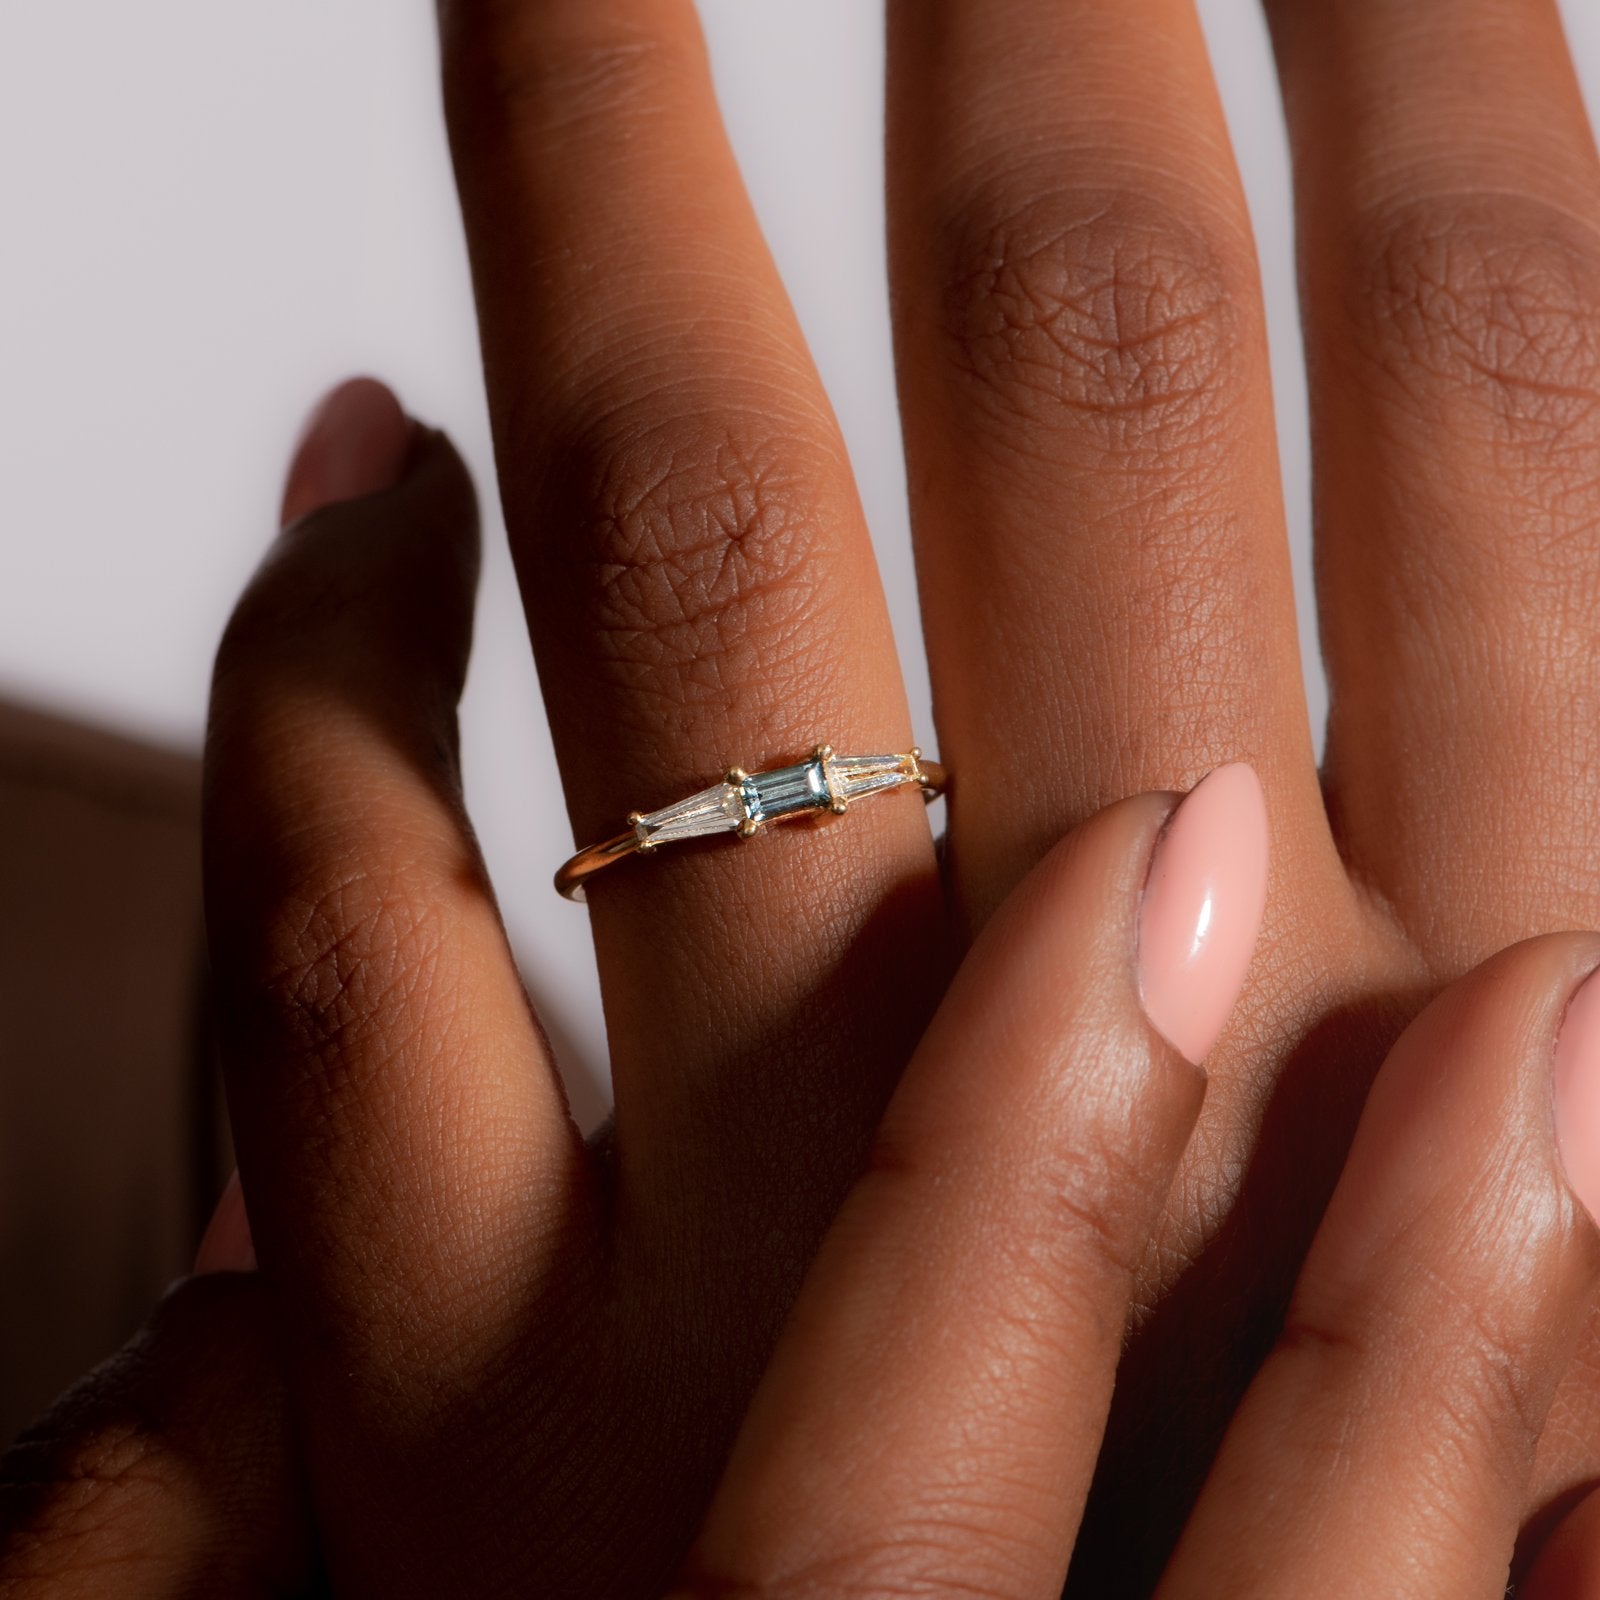 Simple and Elegant Minimalist Engagement Ring - Less Is More - Eurekalook